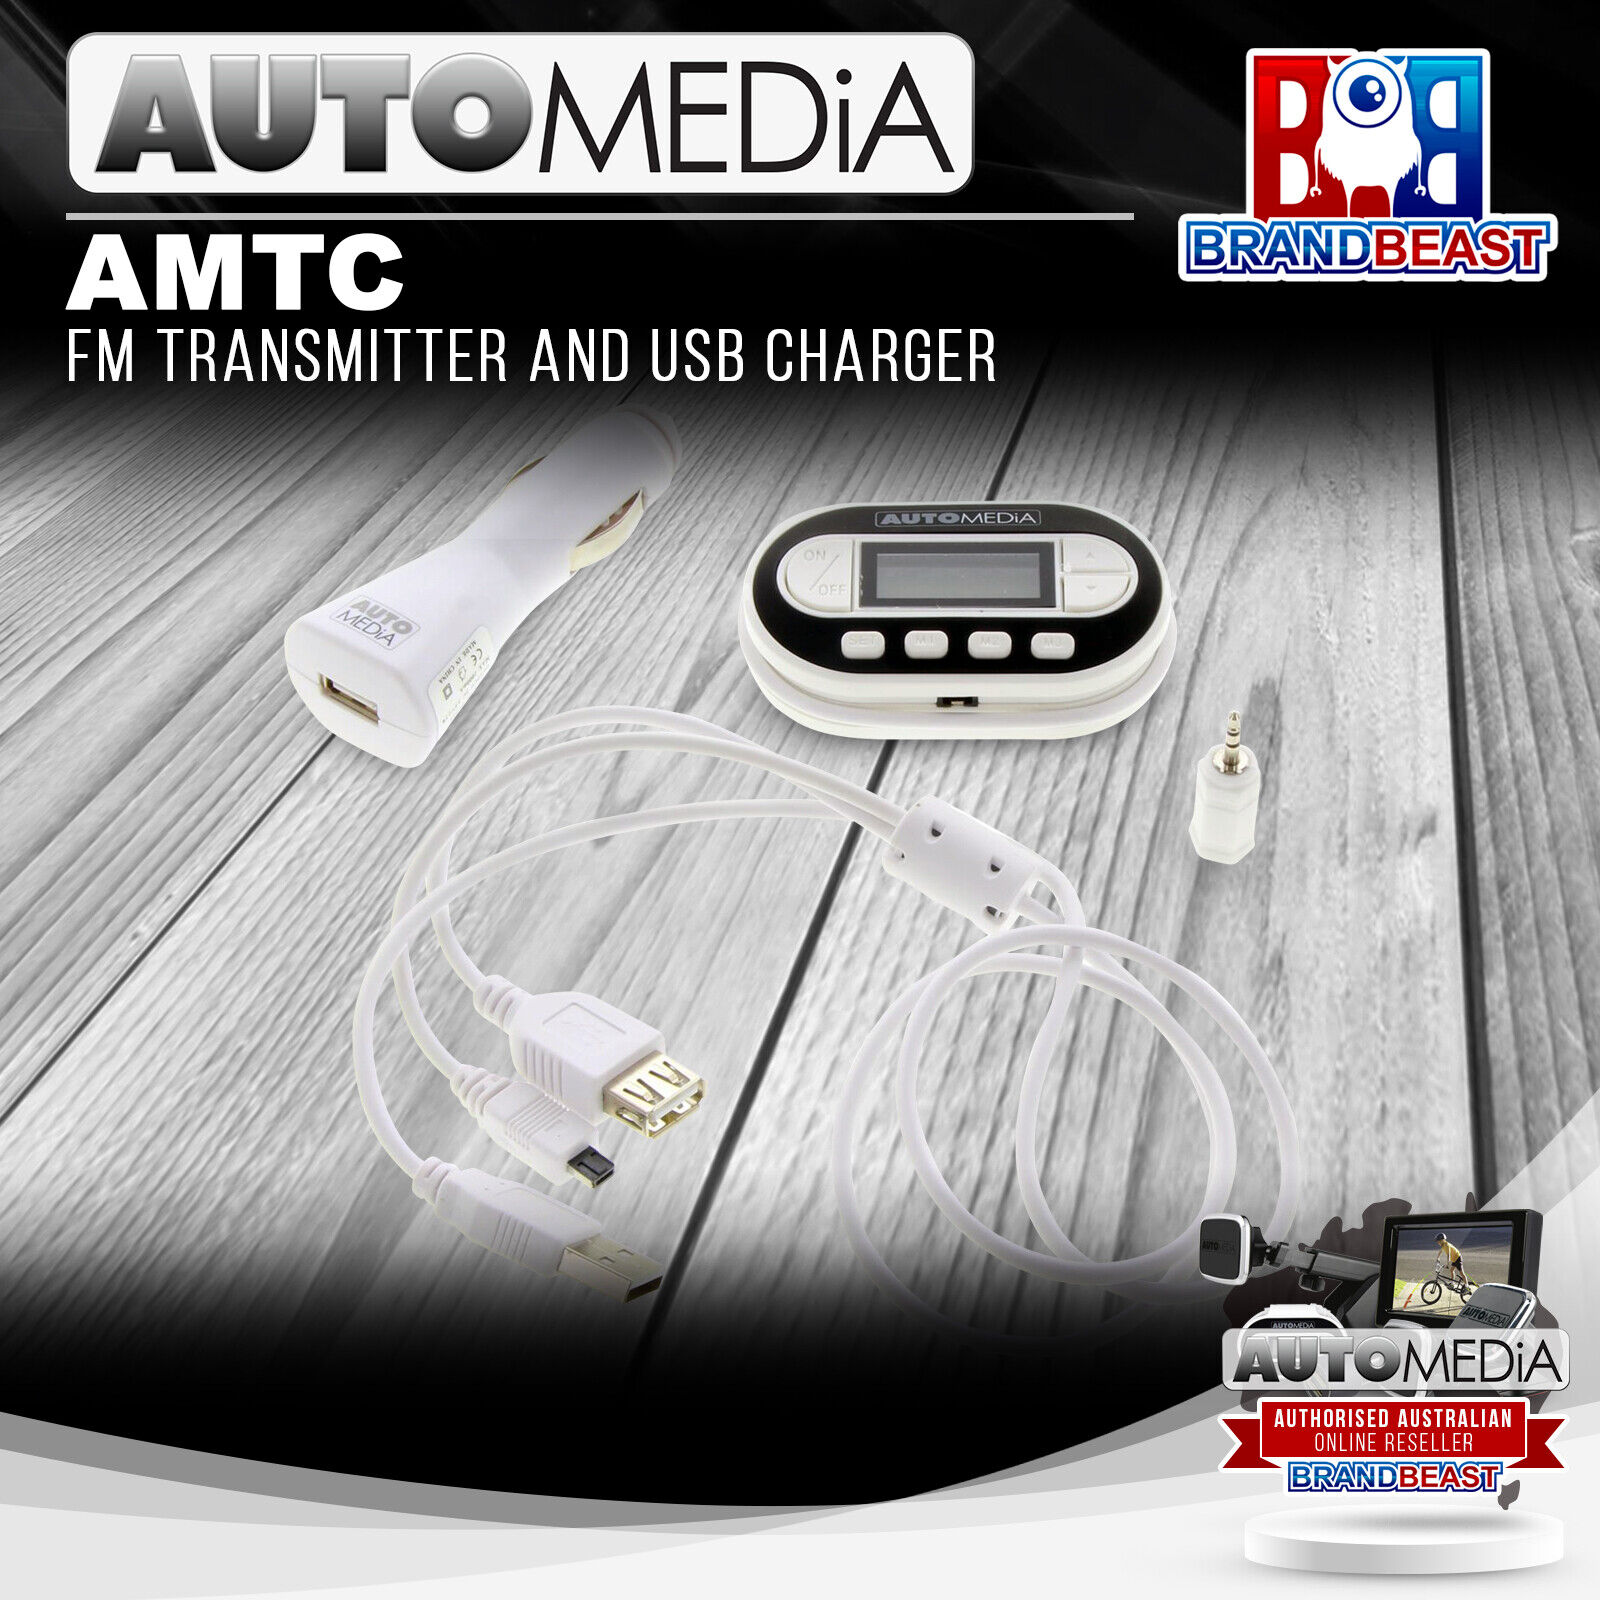 Automedia AMTC FM Transmitter & USB Charger - BrandBeast